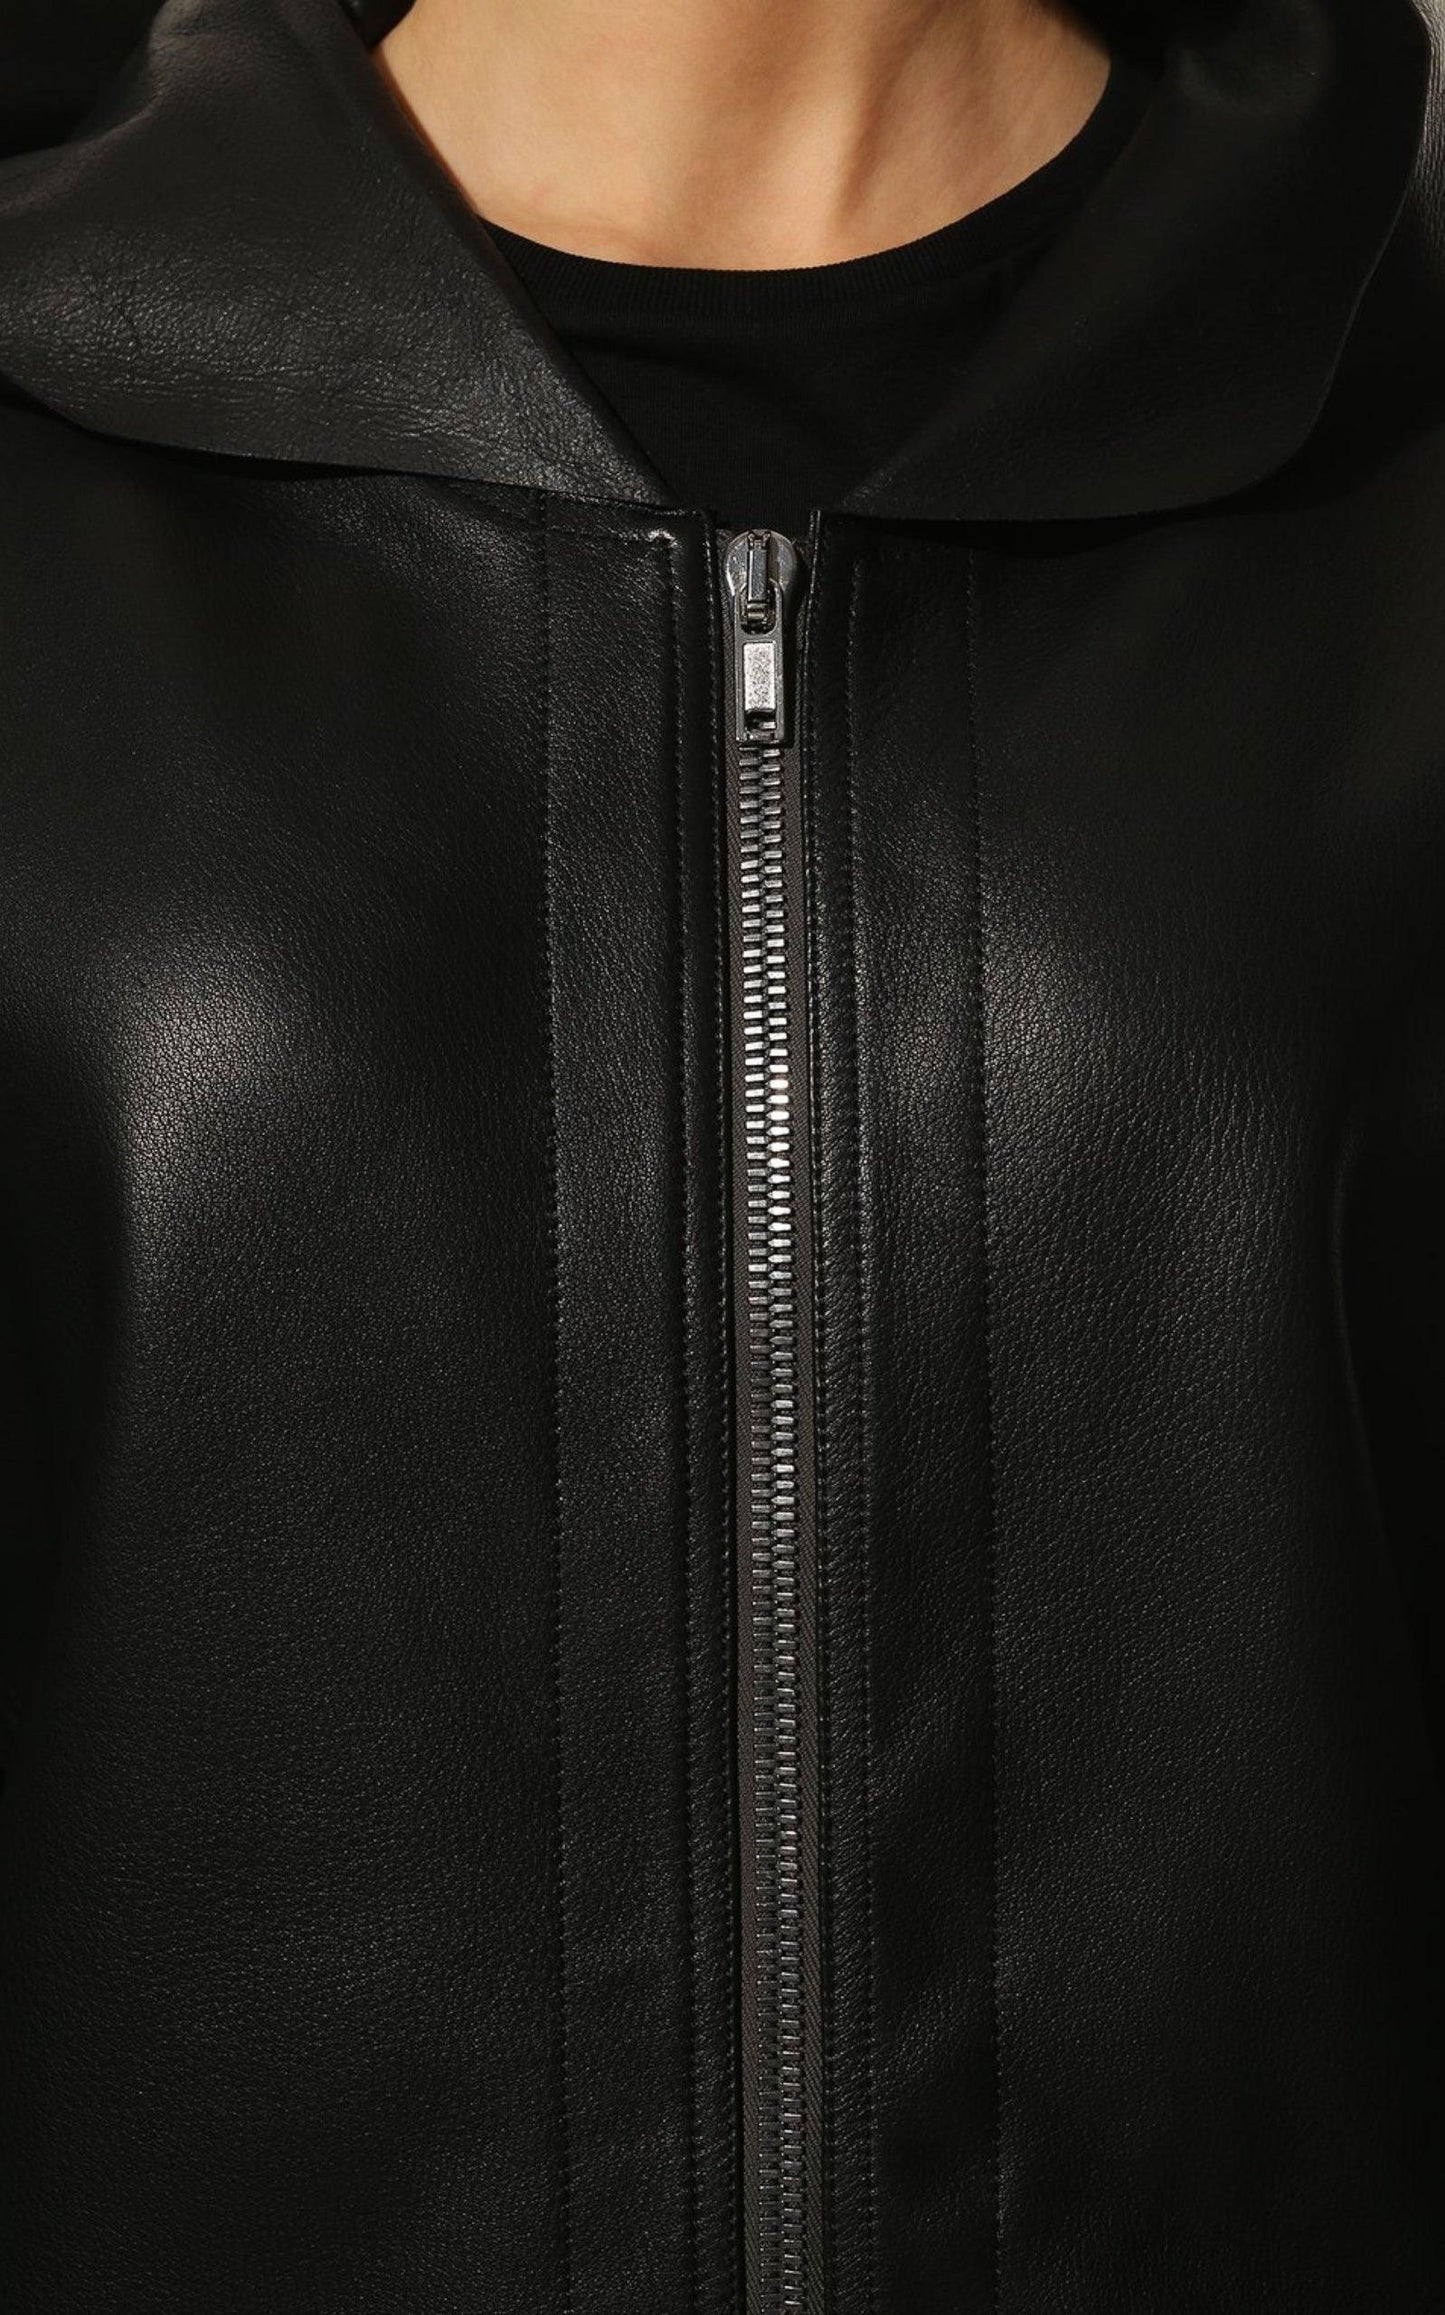 Black Peter Leather Jacket